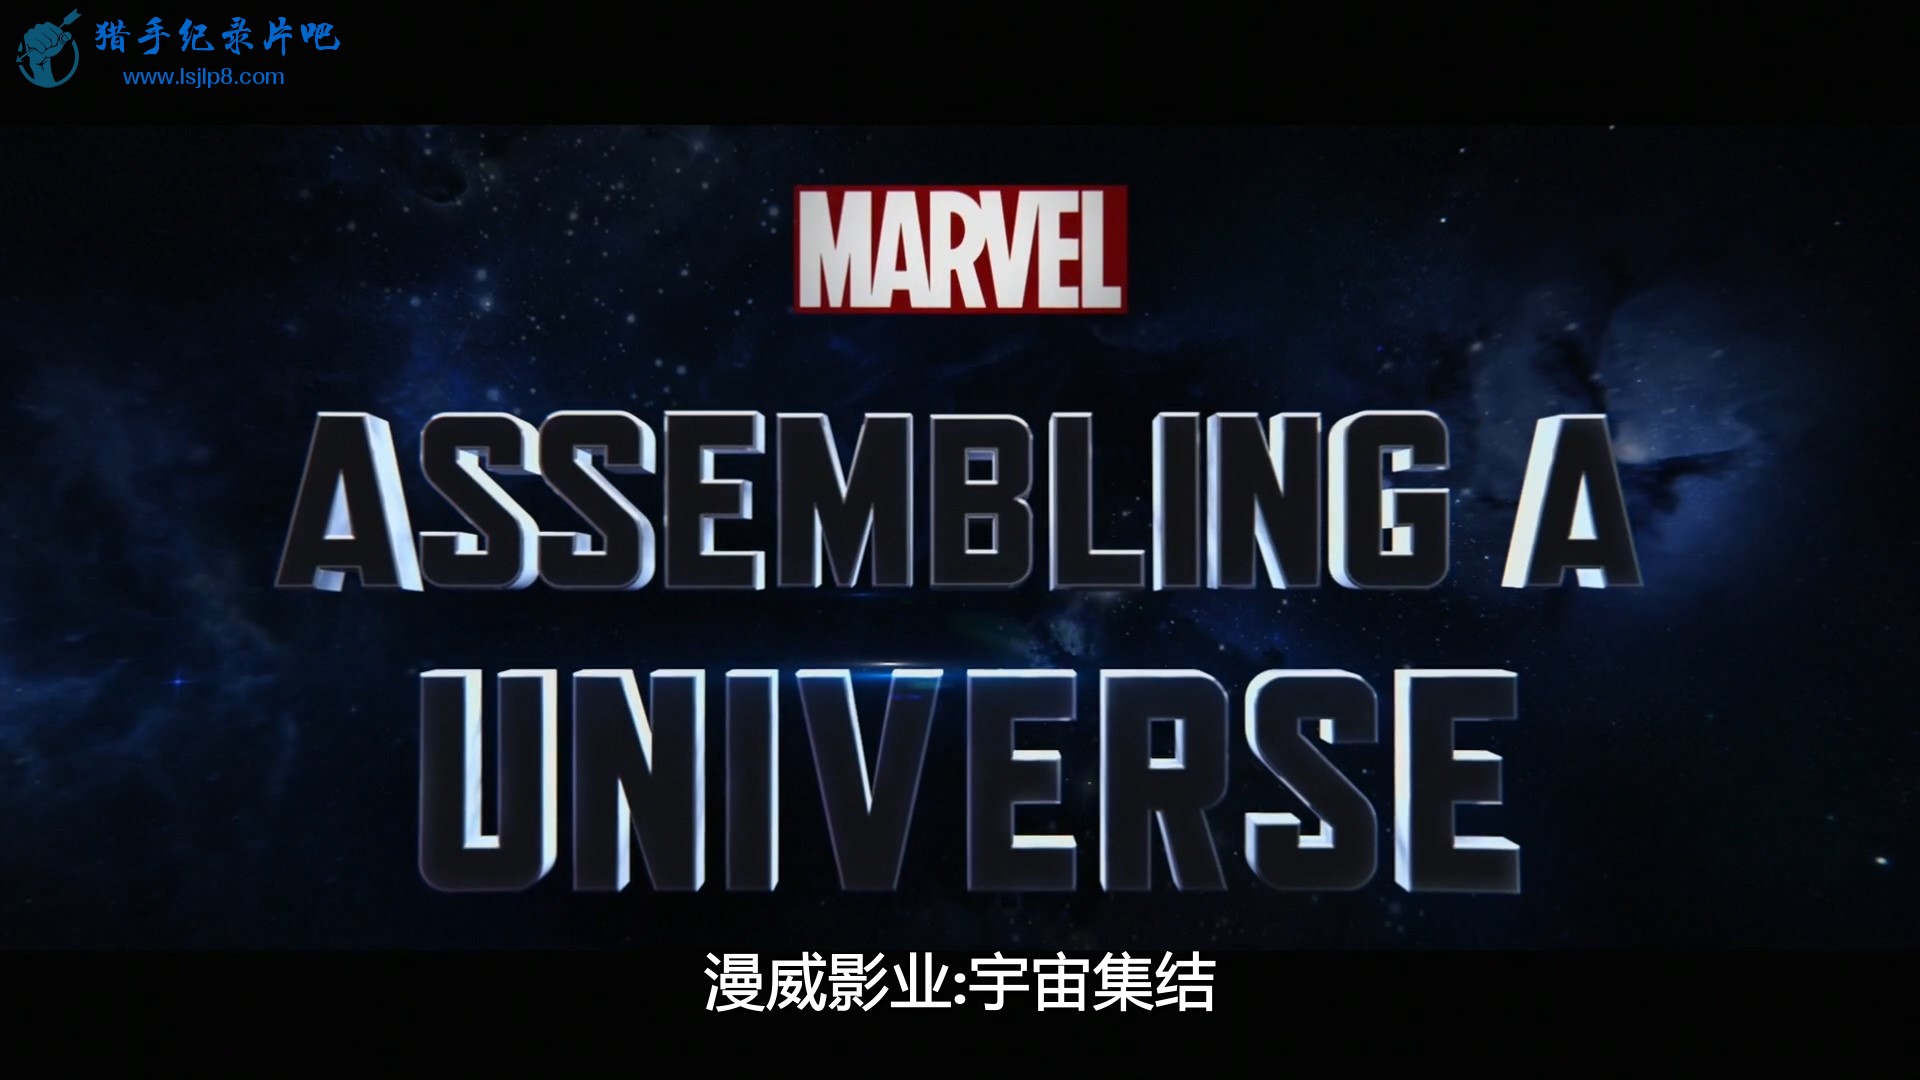 Marvel.Studios.Assembling.a.Universe.1080p.WEB-DL.DD5.1.AAC2.0.H.264-YFN.mkv_201.jpg